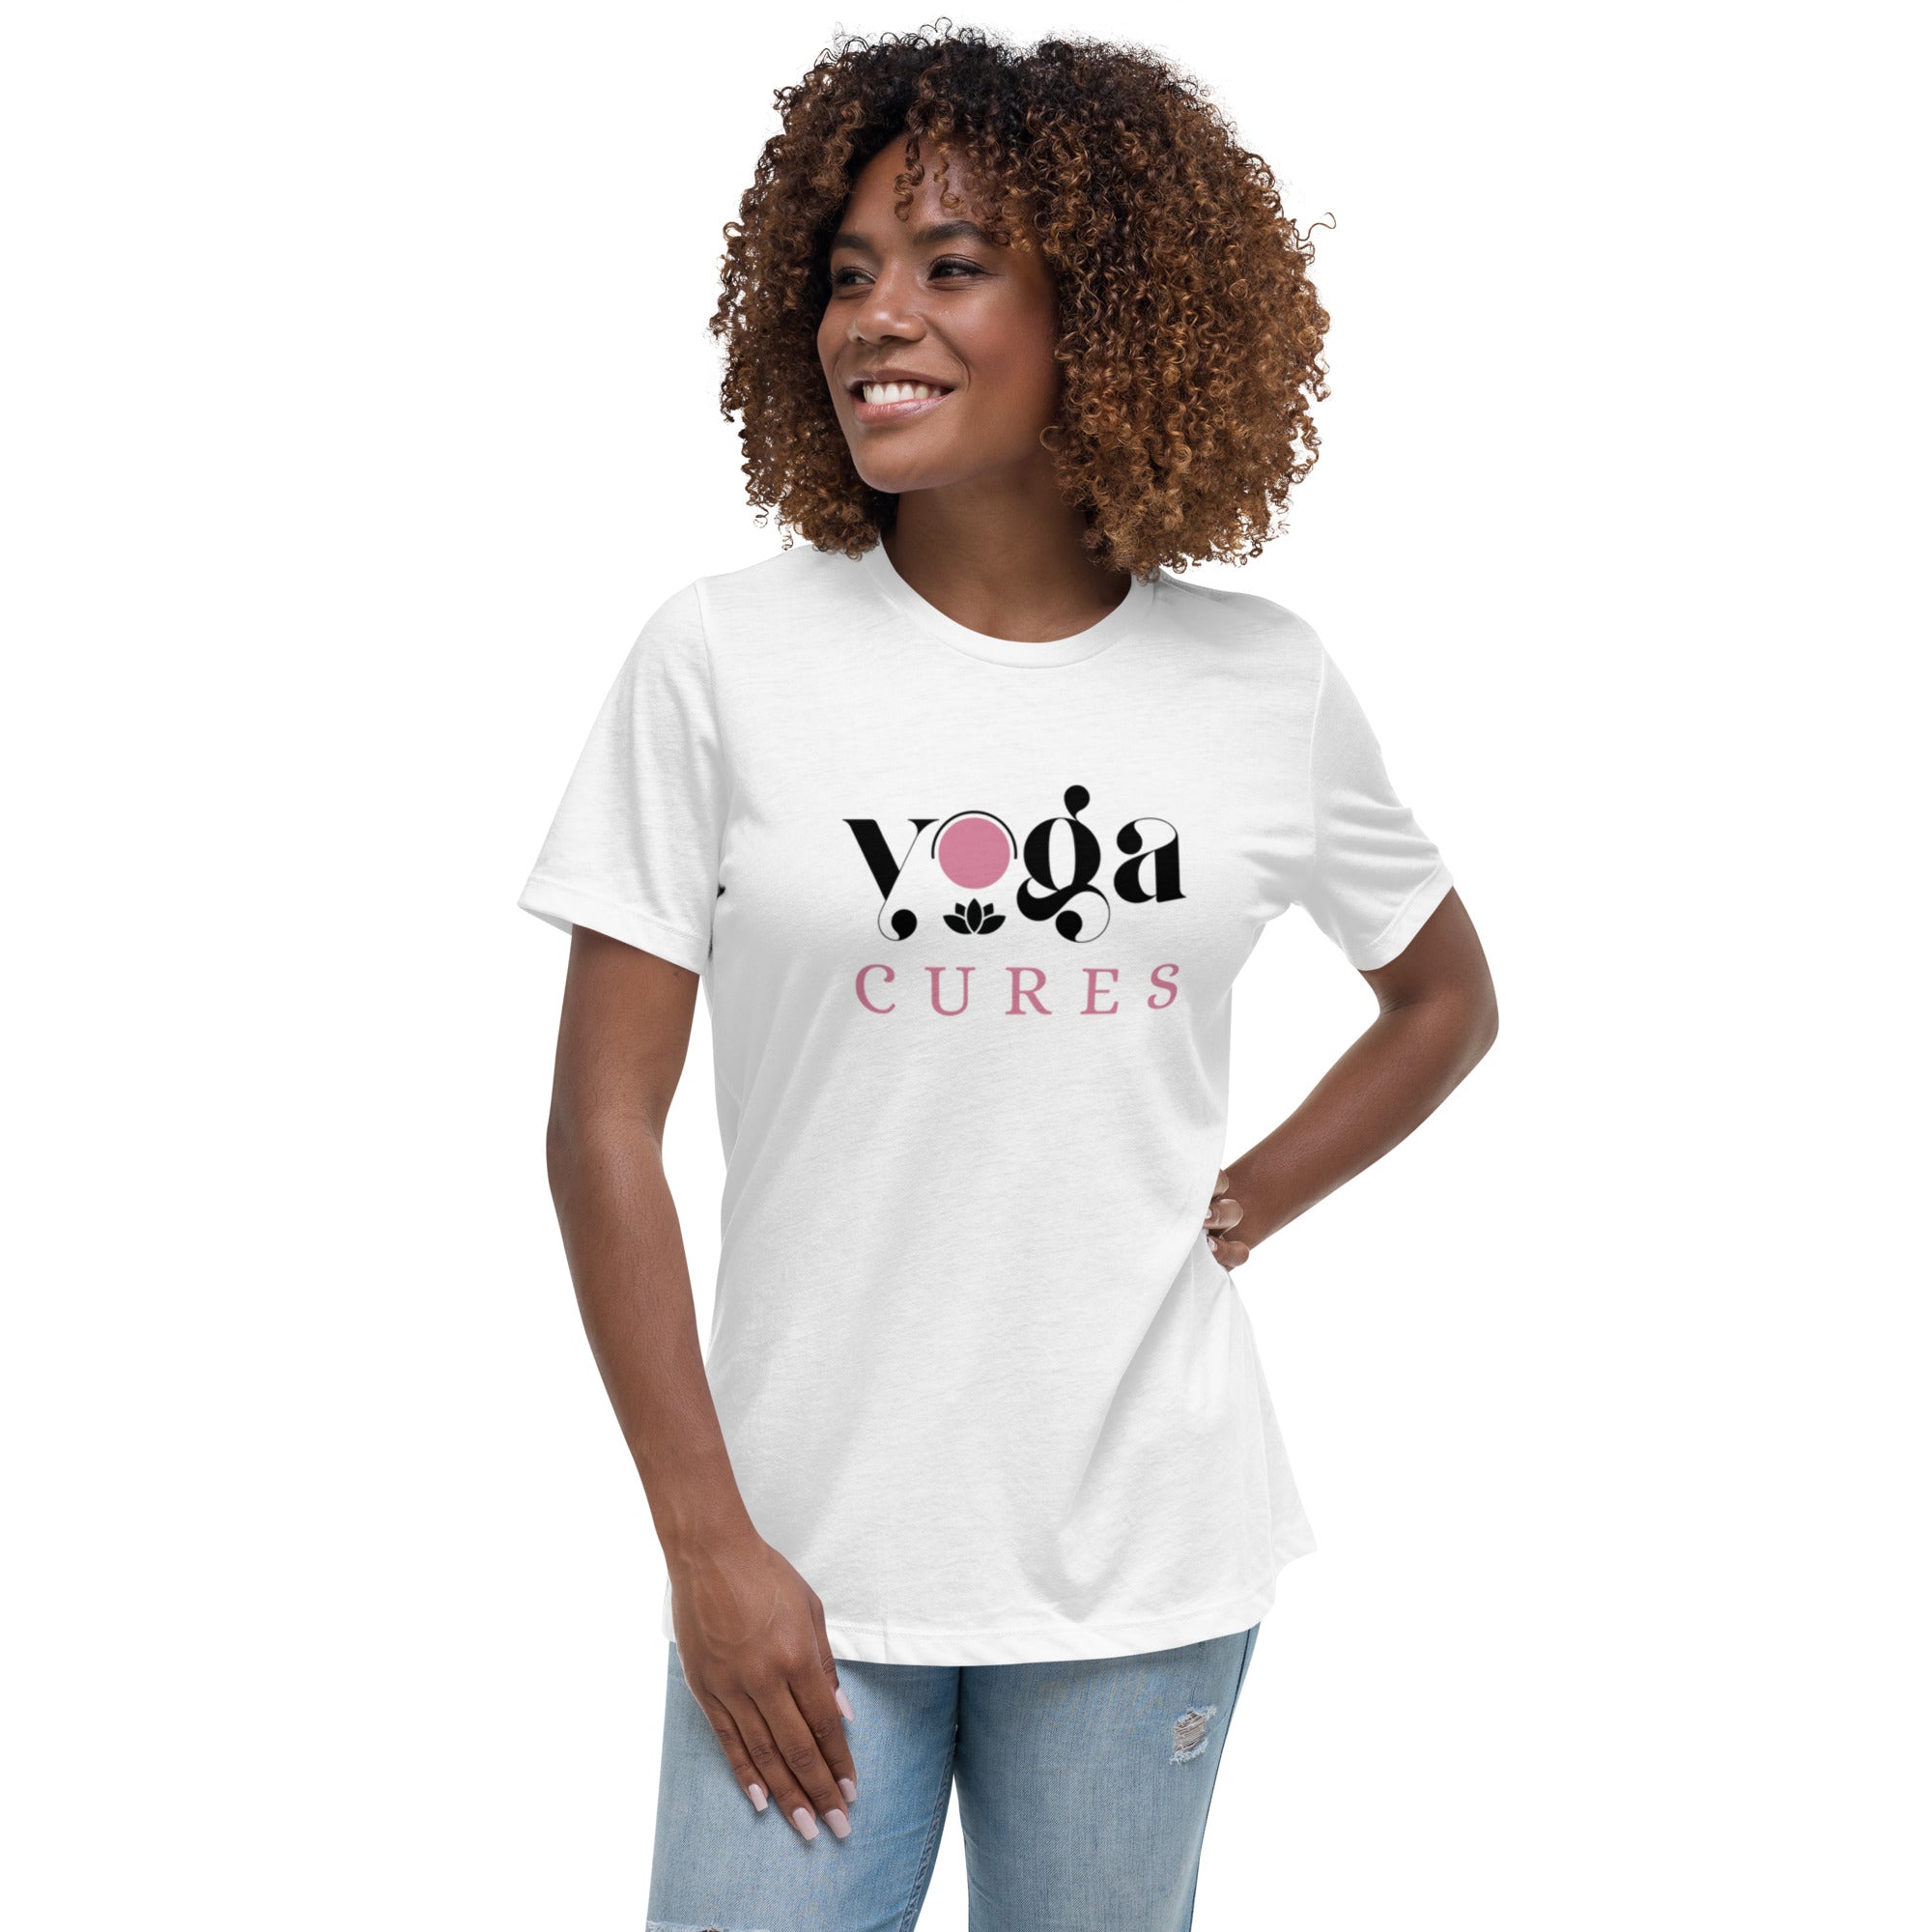 Yoga Cures Women's T-Shirt - POD SARTO